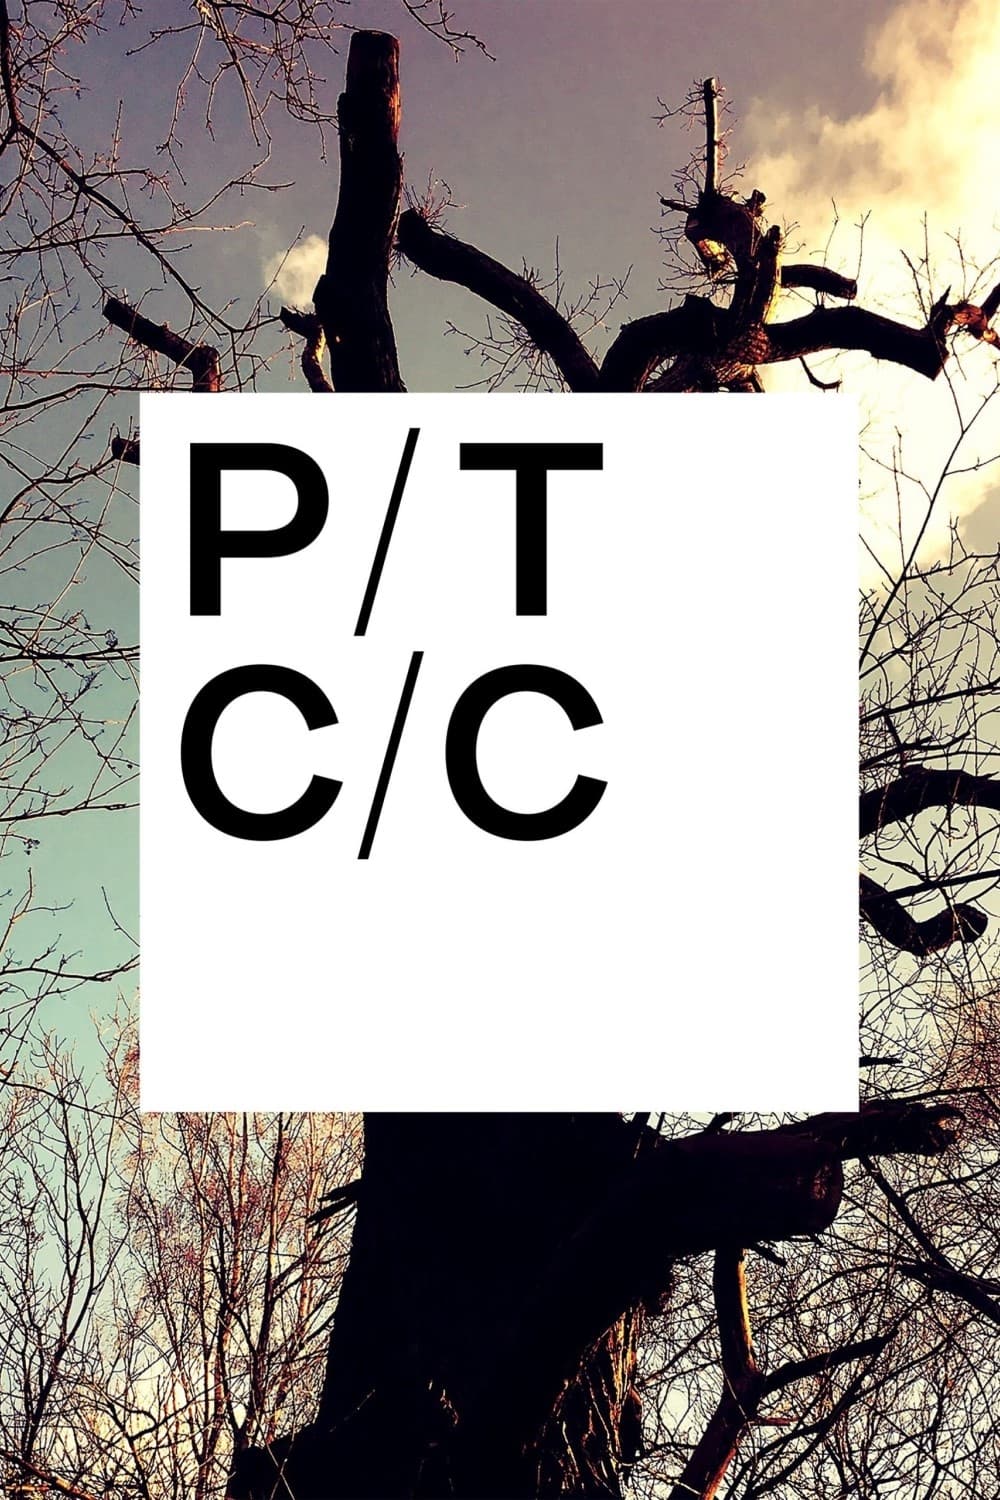 Porcupine Tree: CLOSURE / CONTINUATION